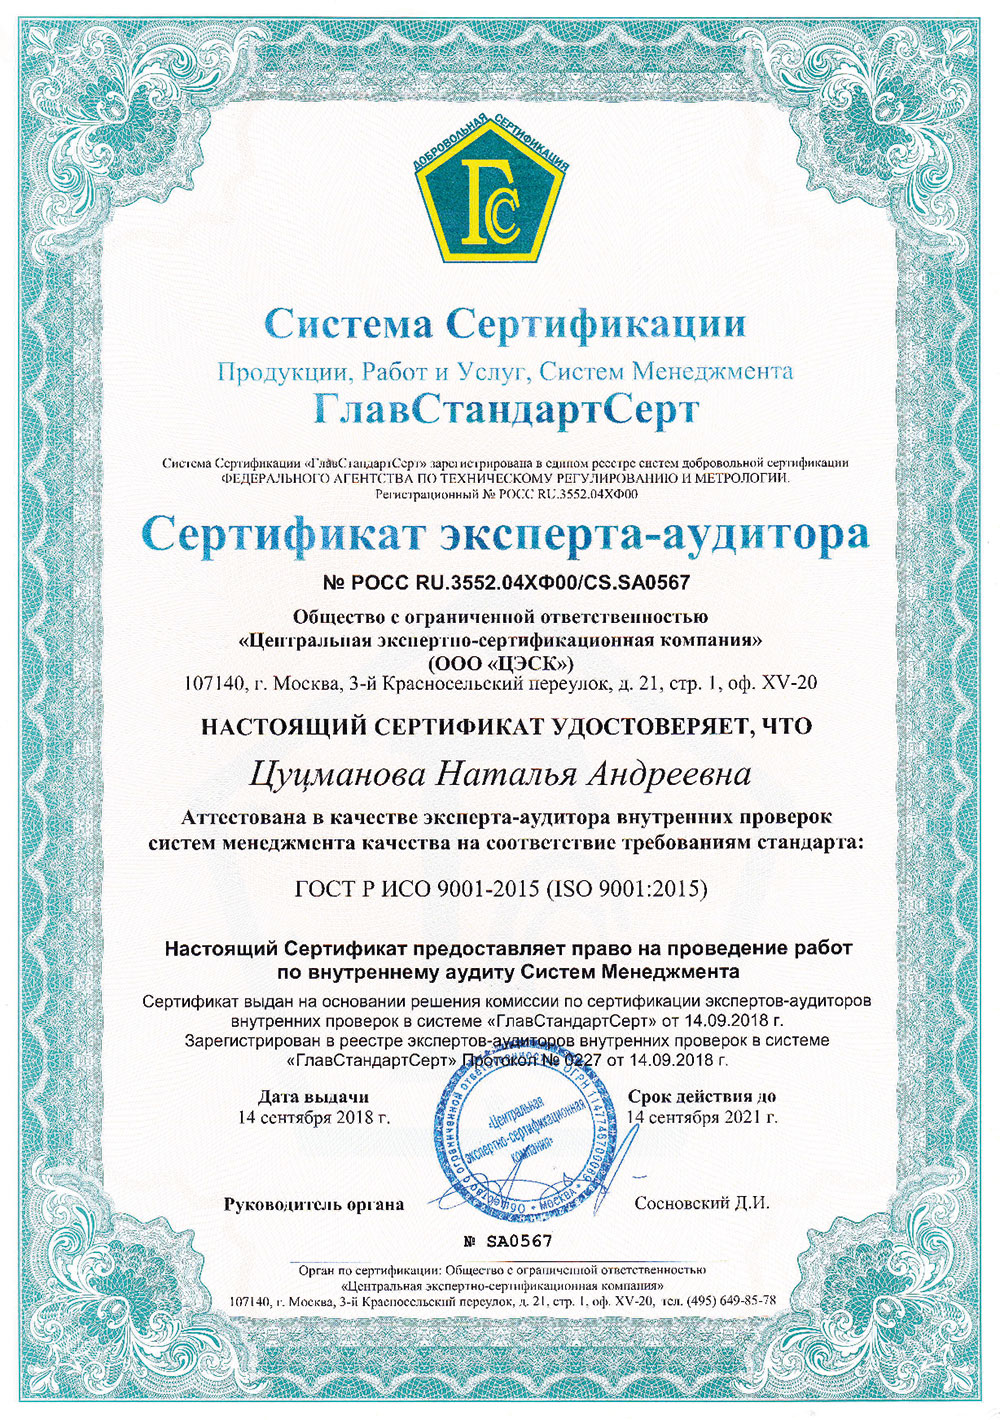 ГлавСтандартСерт — Сертификат эксперта-аудитора